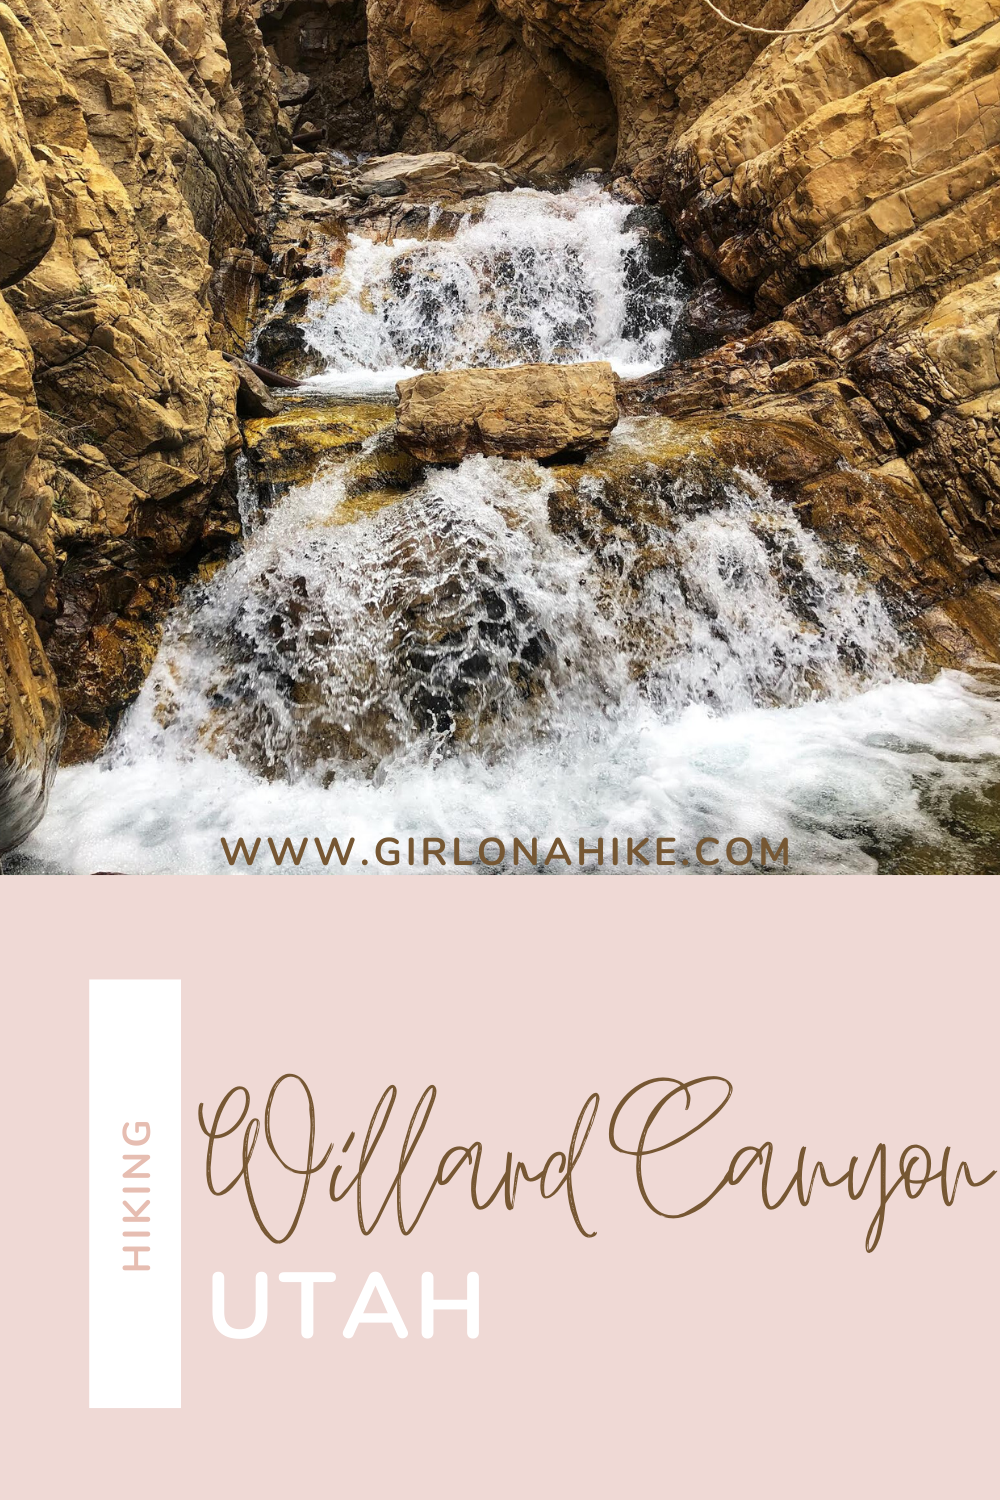 Hiking Willard Canyon to Falls, hiking willard creek